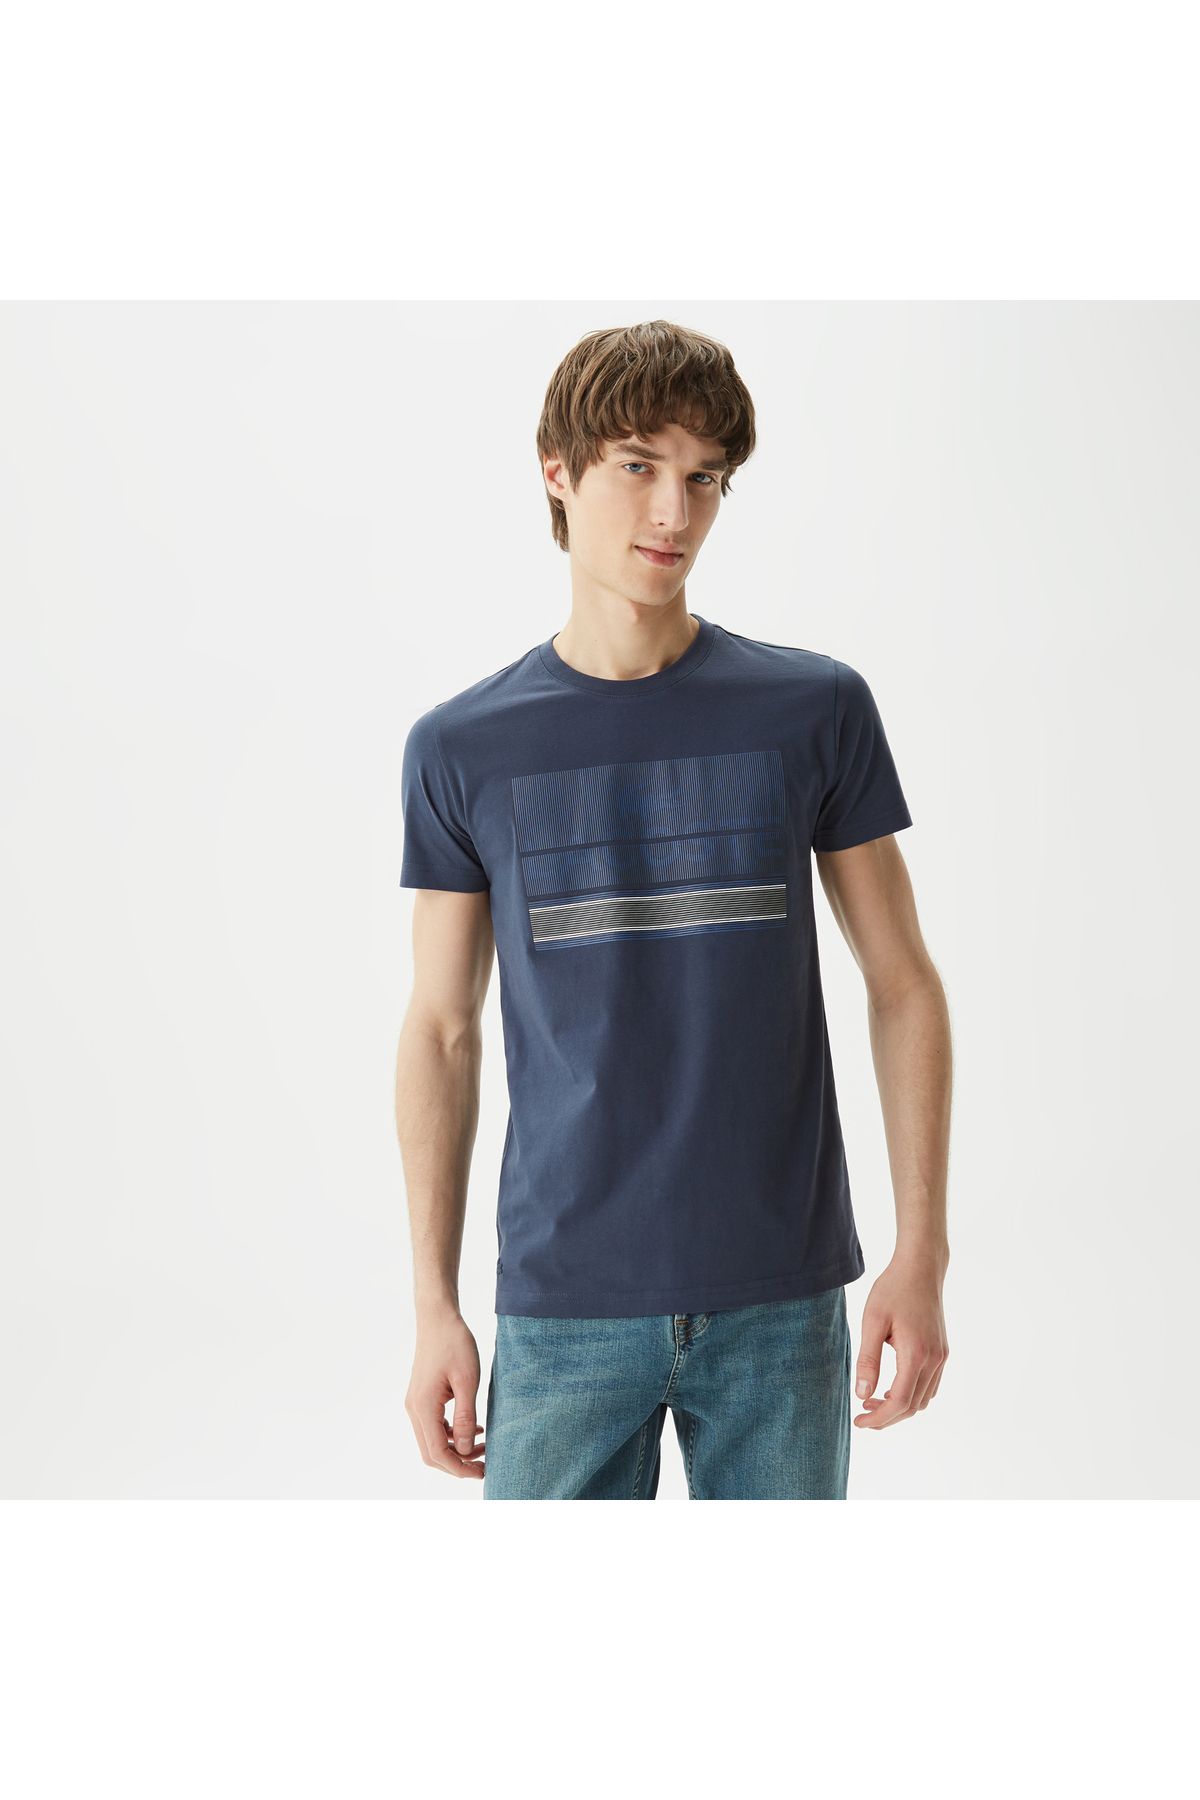 Lacoste Erkek Mavi T-shirt